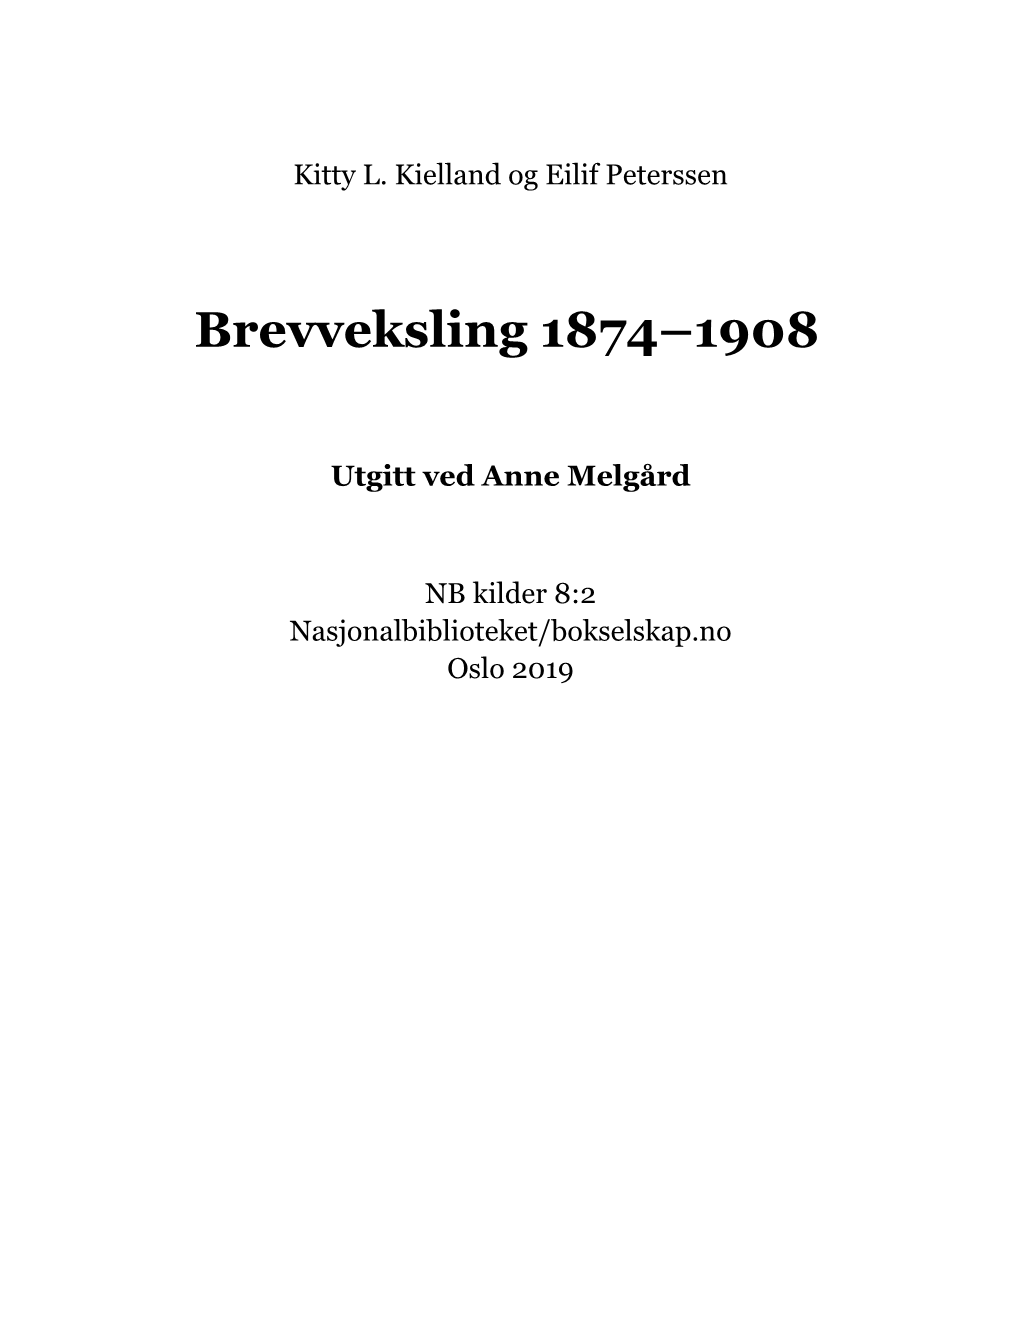 Brevveksling 1874-1908